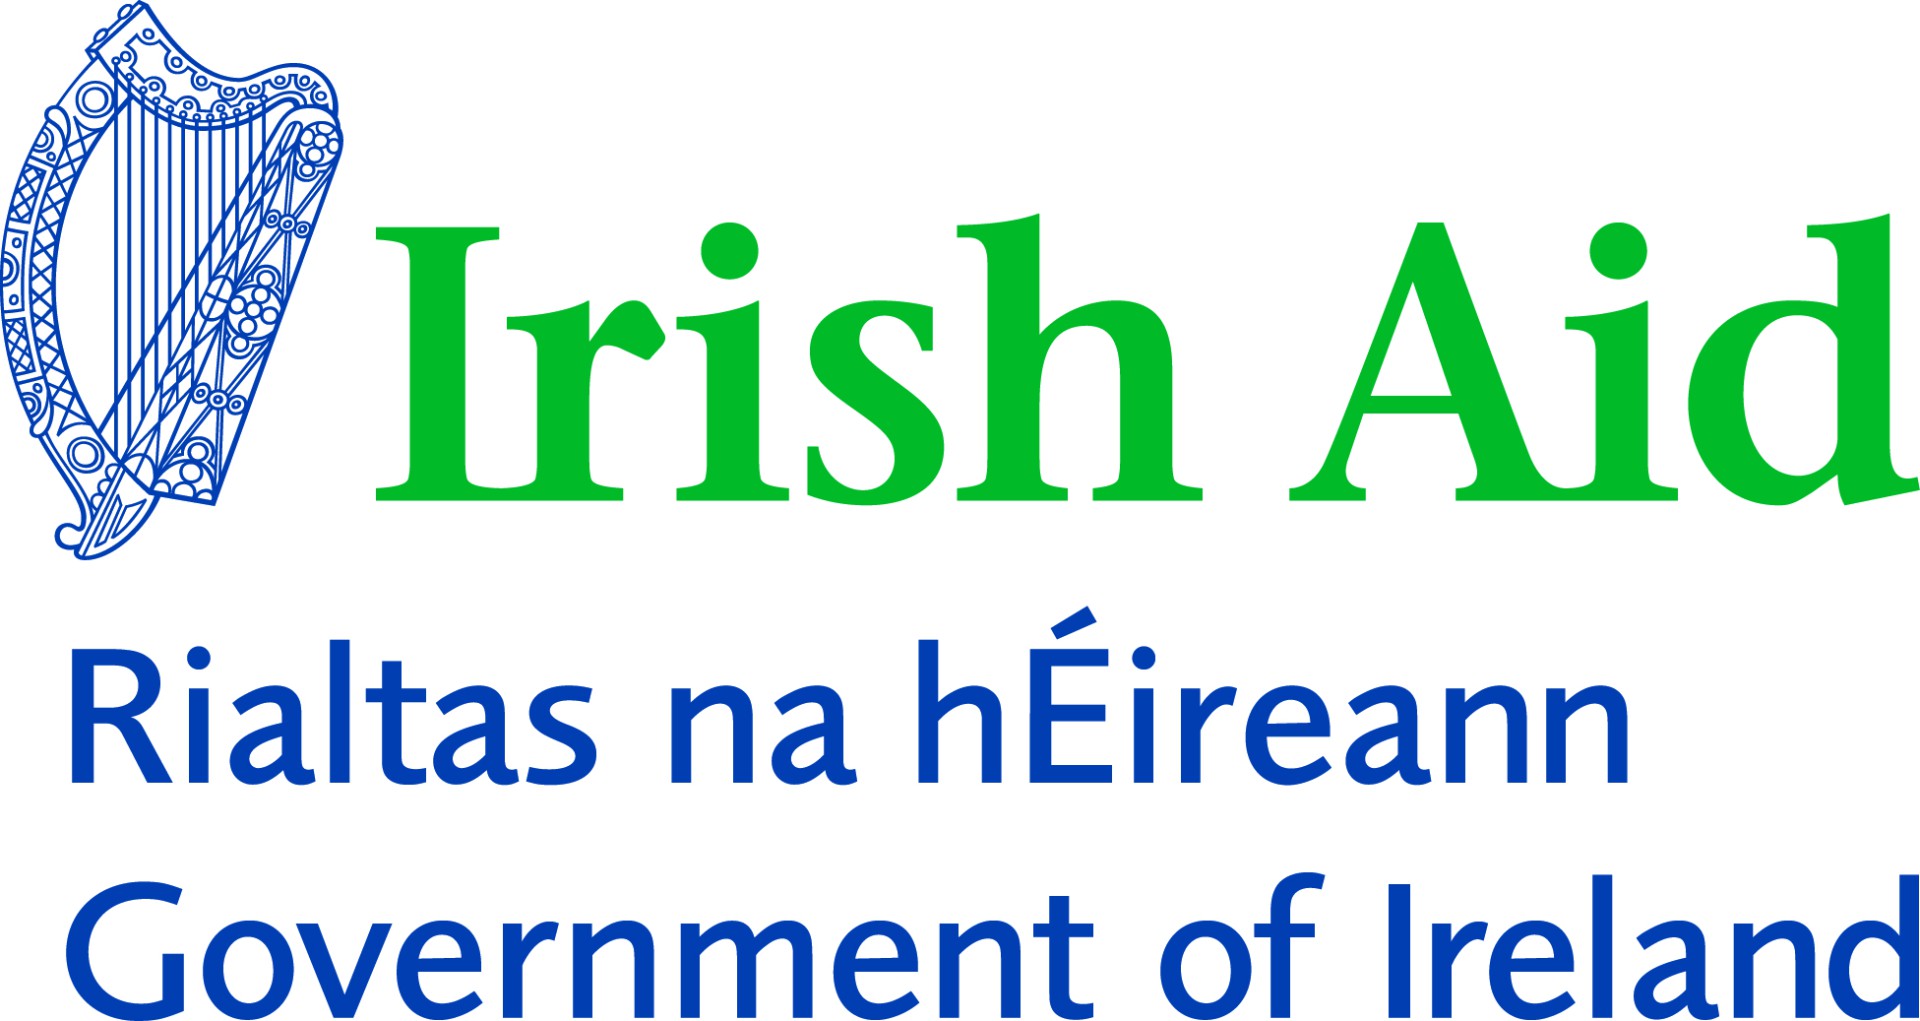 Irish Aid